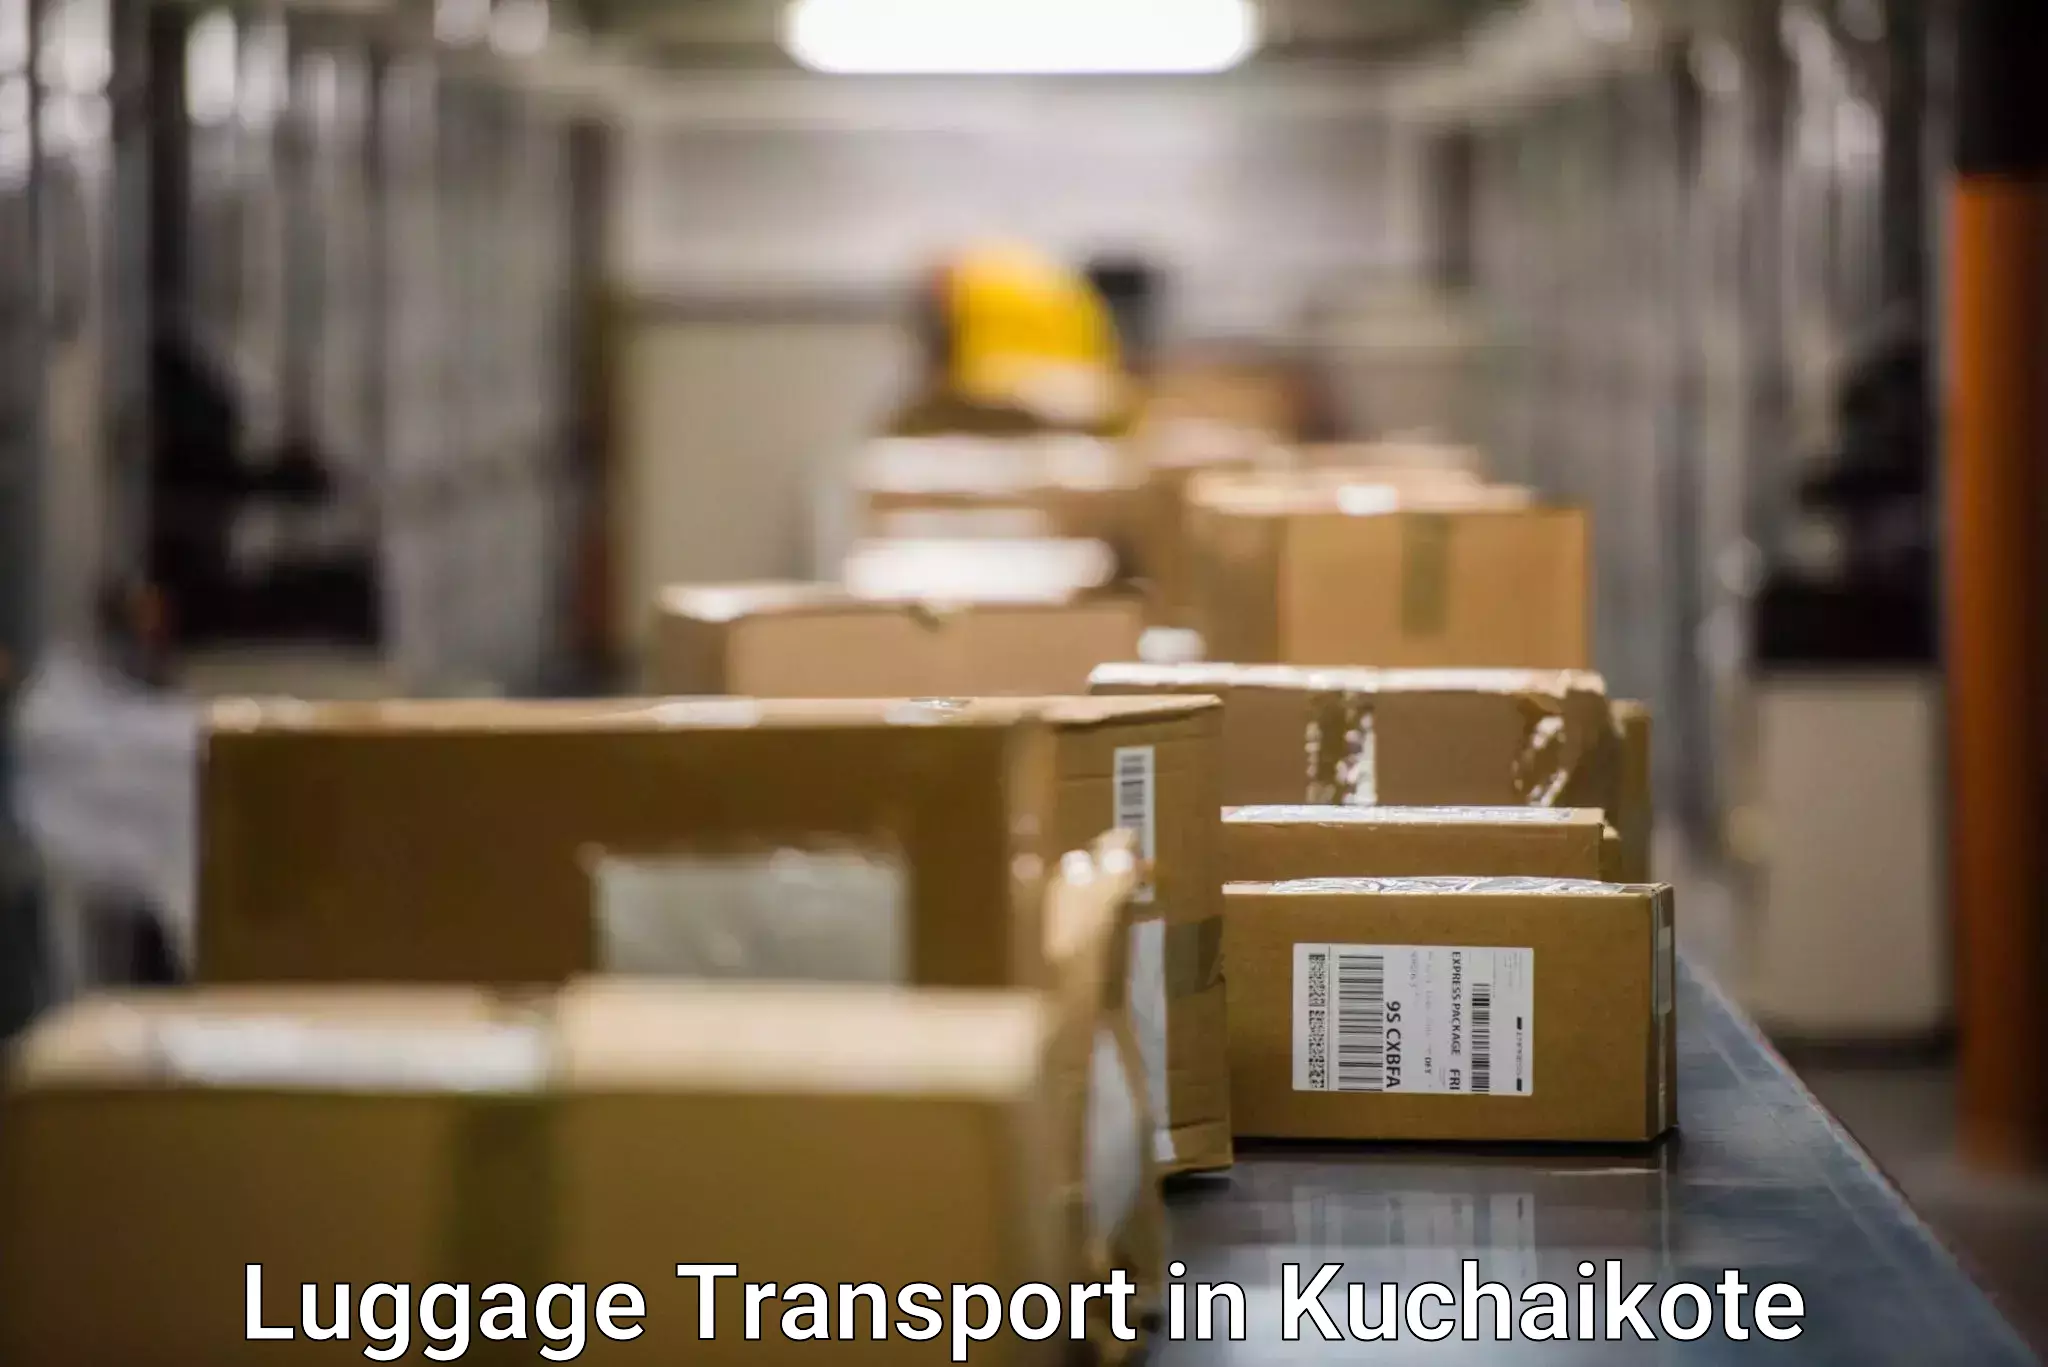 Luggage transport service in Kuchaikote